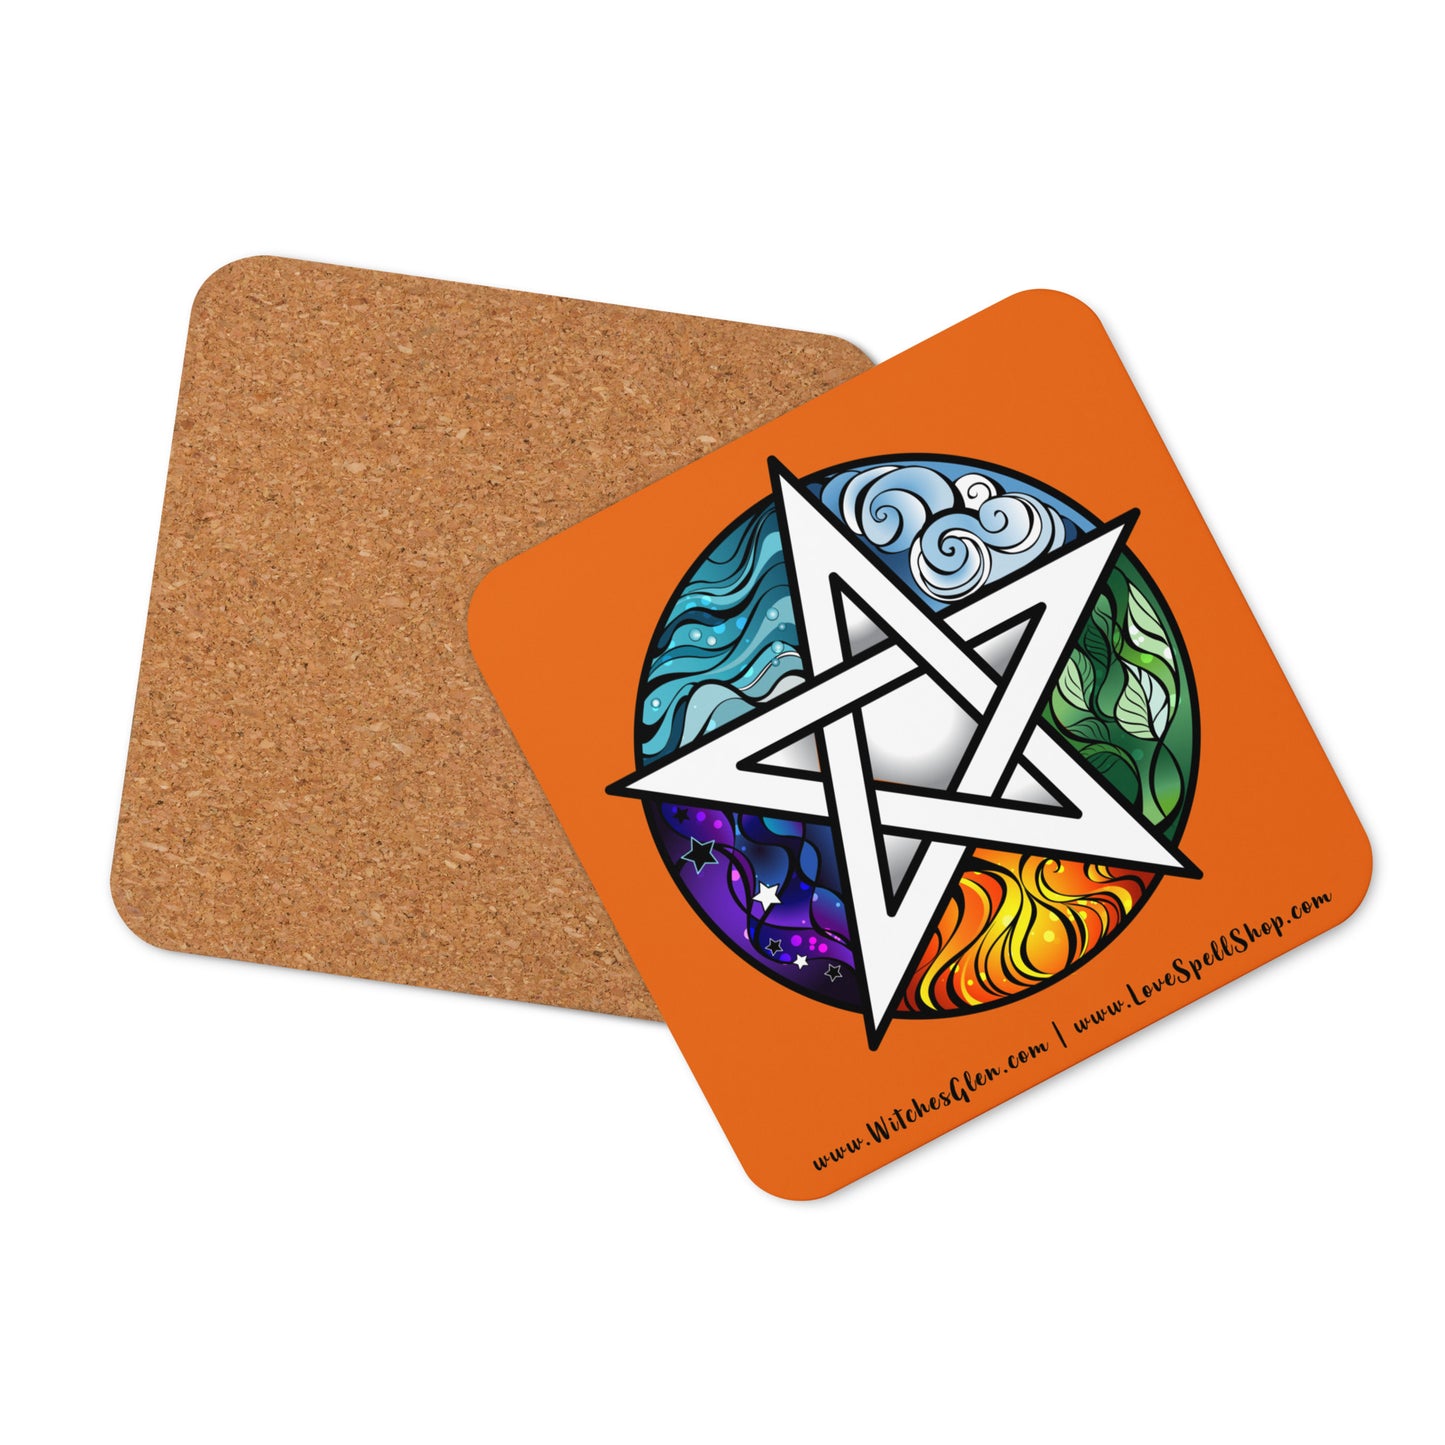 Cork-back Coaster: Pentacle and Elements (deep orange)